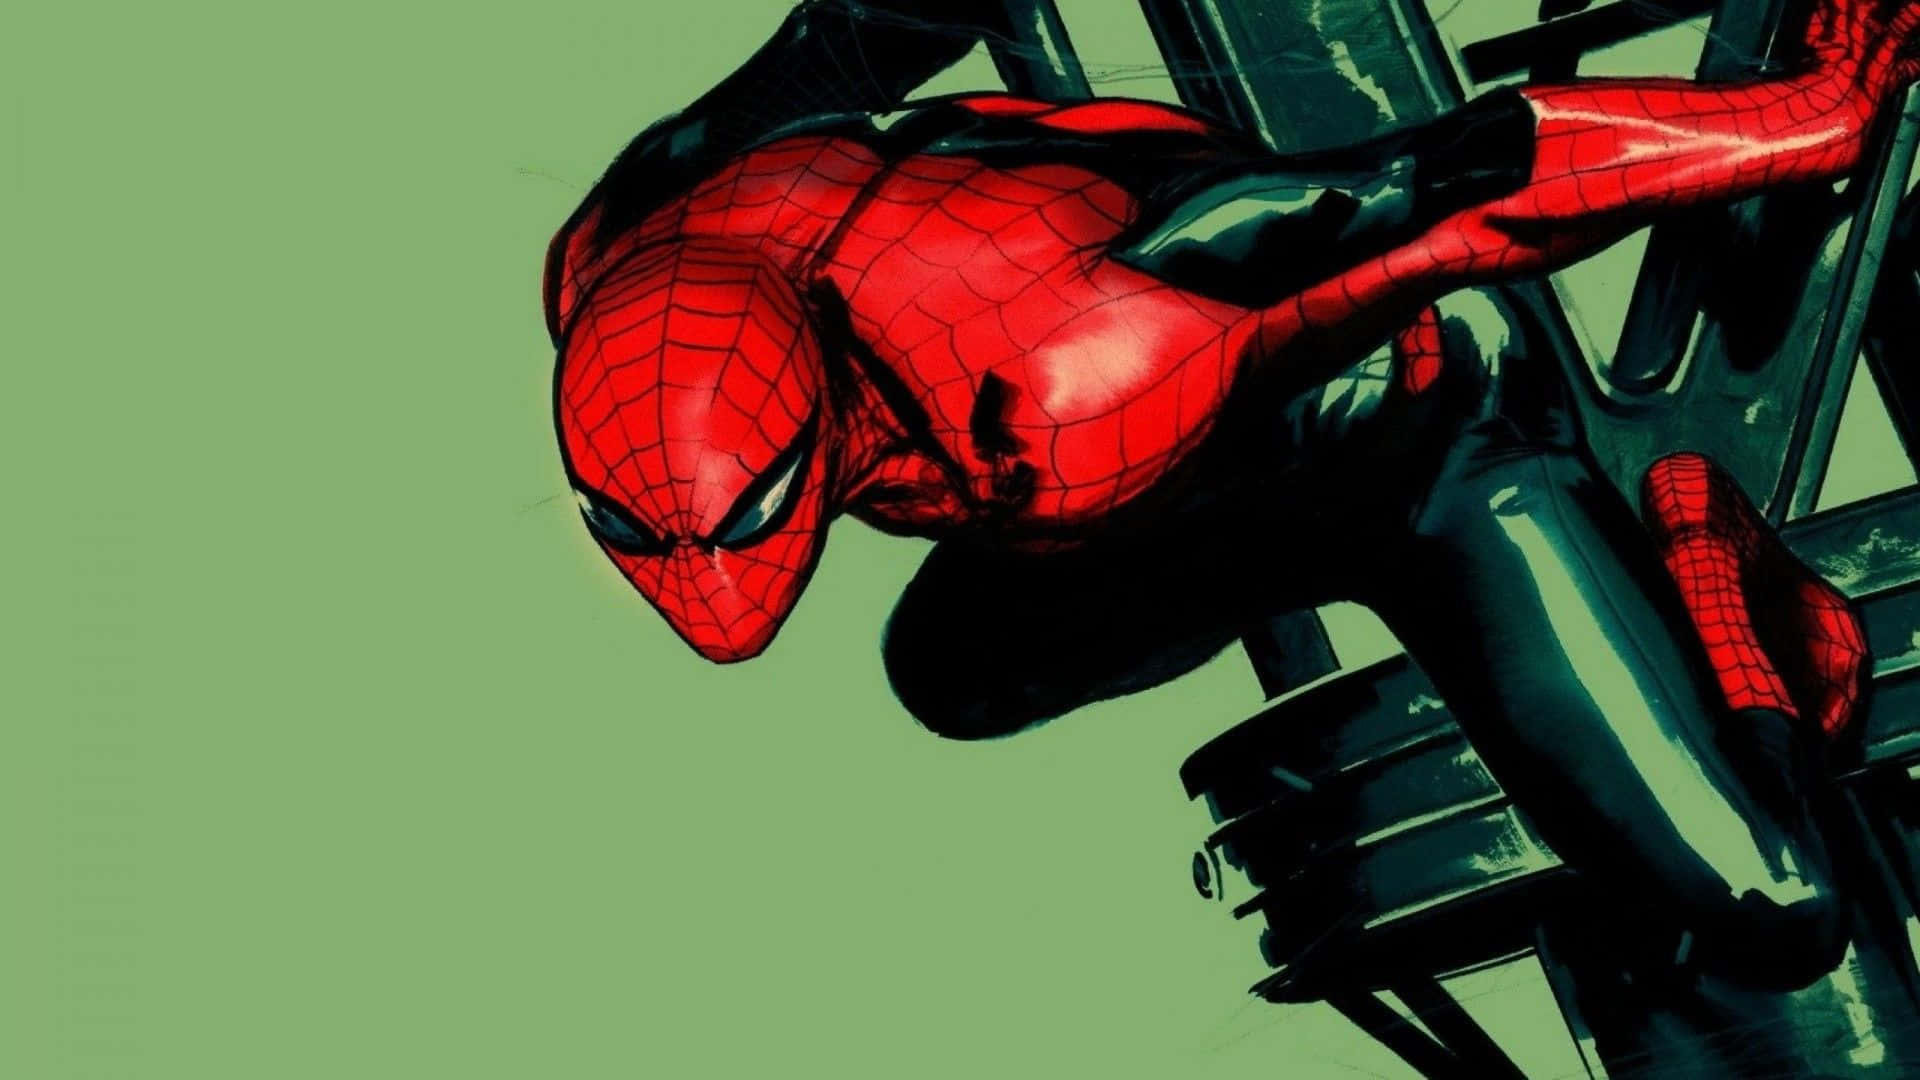 Fondode Pantalla Para Computadora Del Superhéroe De Cómic Spiderman. Fondo de pantalla